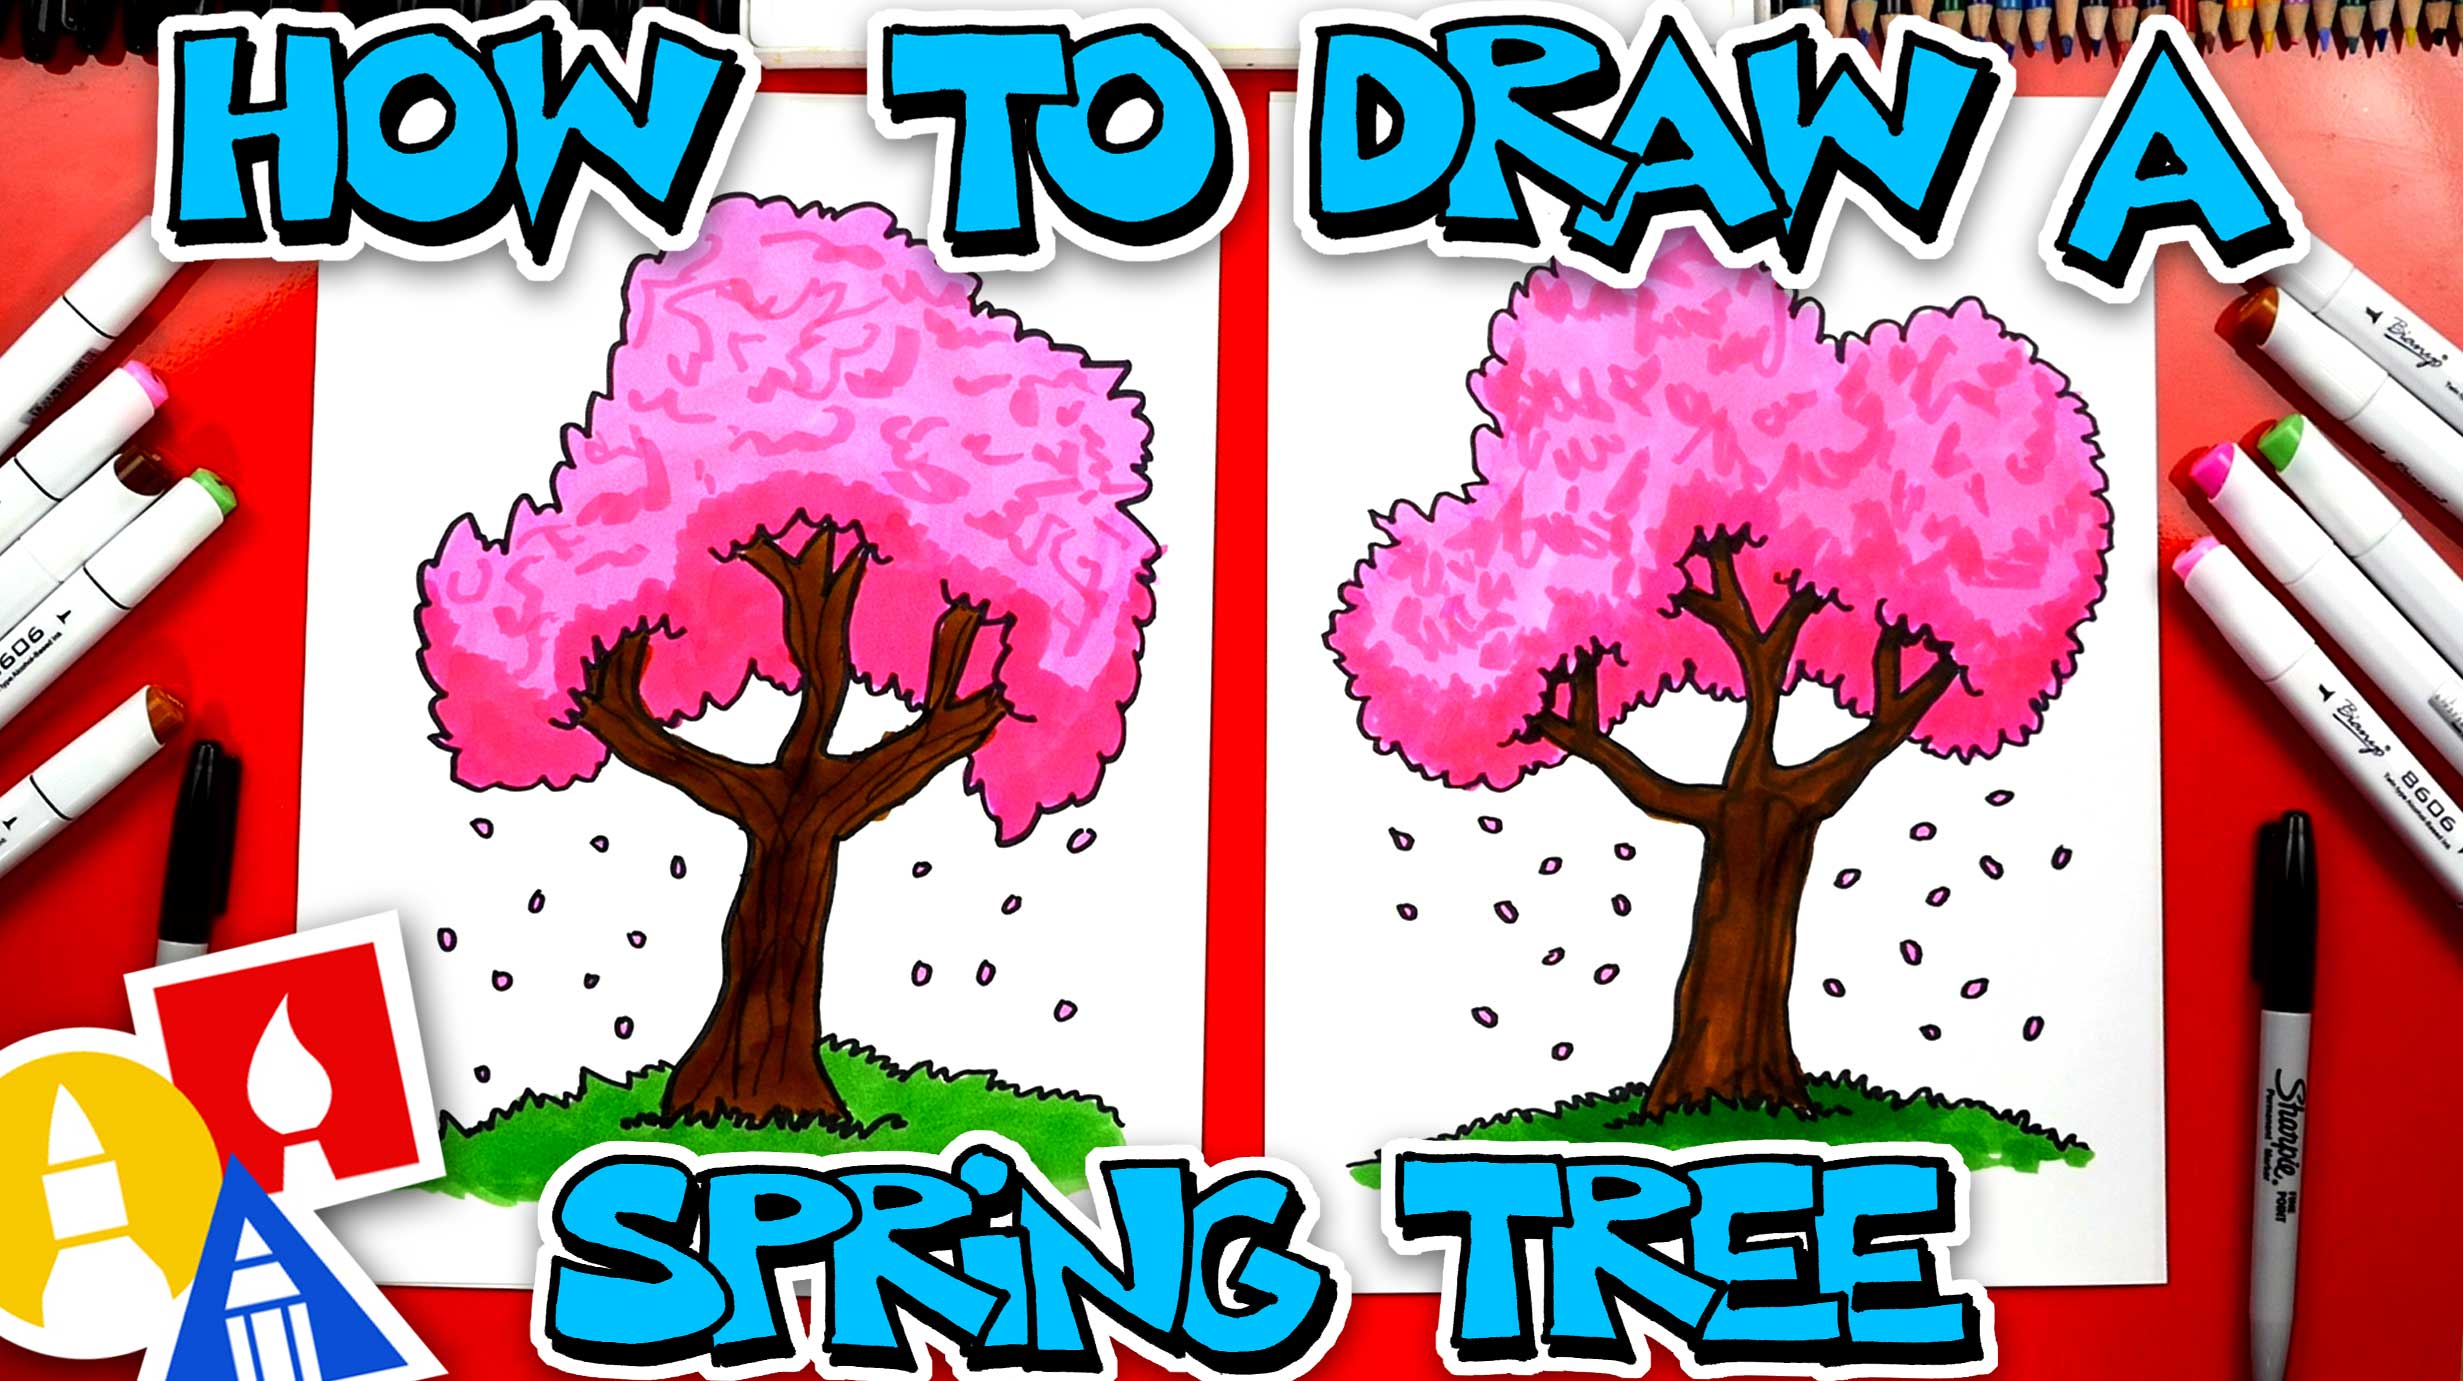 Sharpie Drawings Of Trees